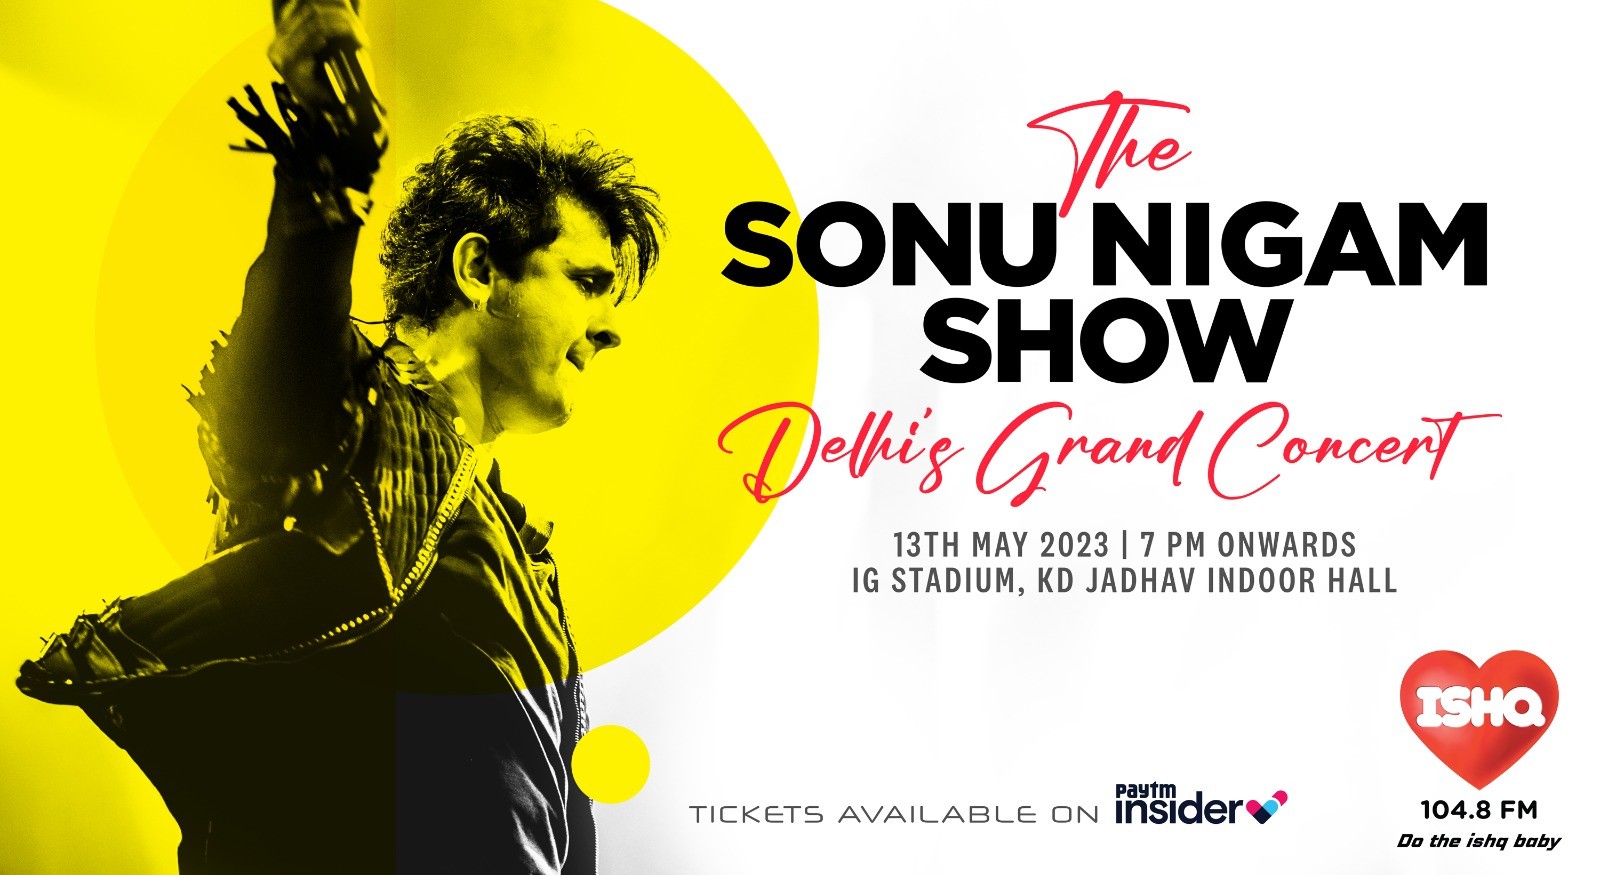 The Sonu Nigam Show Delhi’s Grand Concert